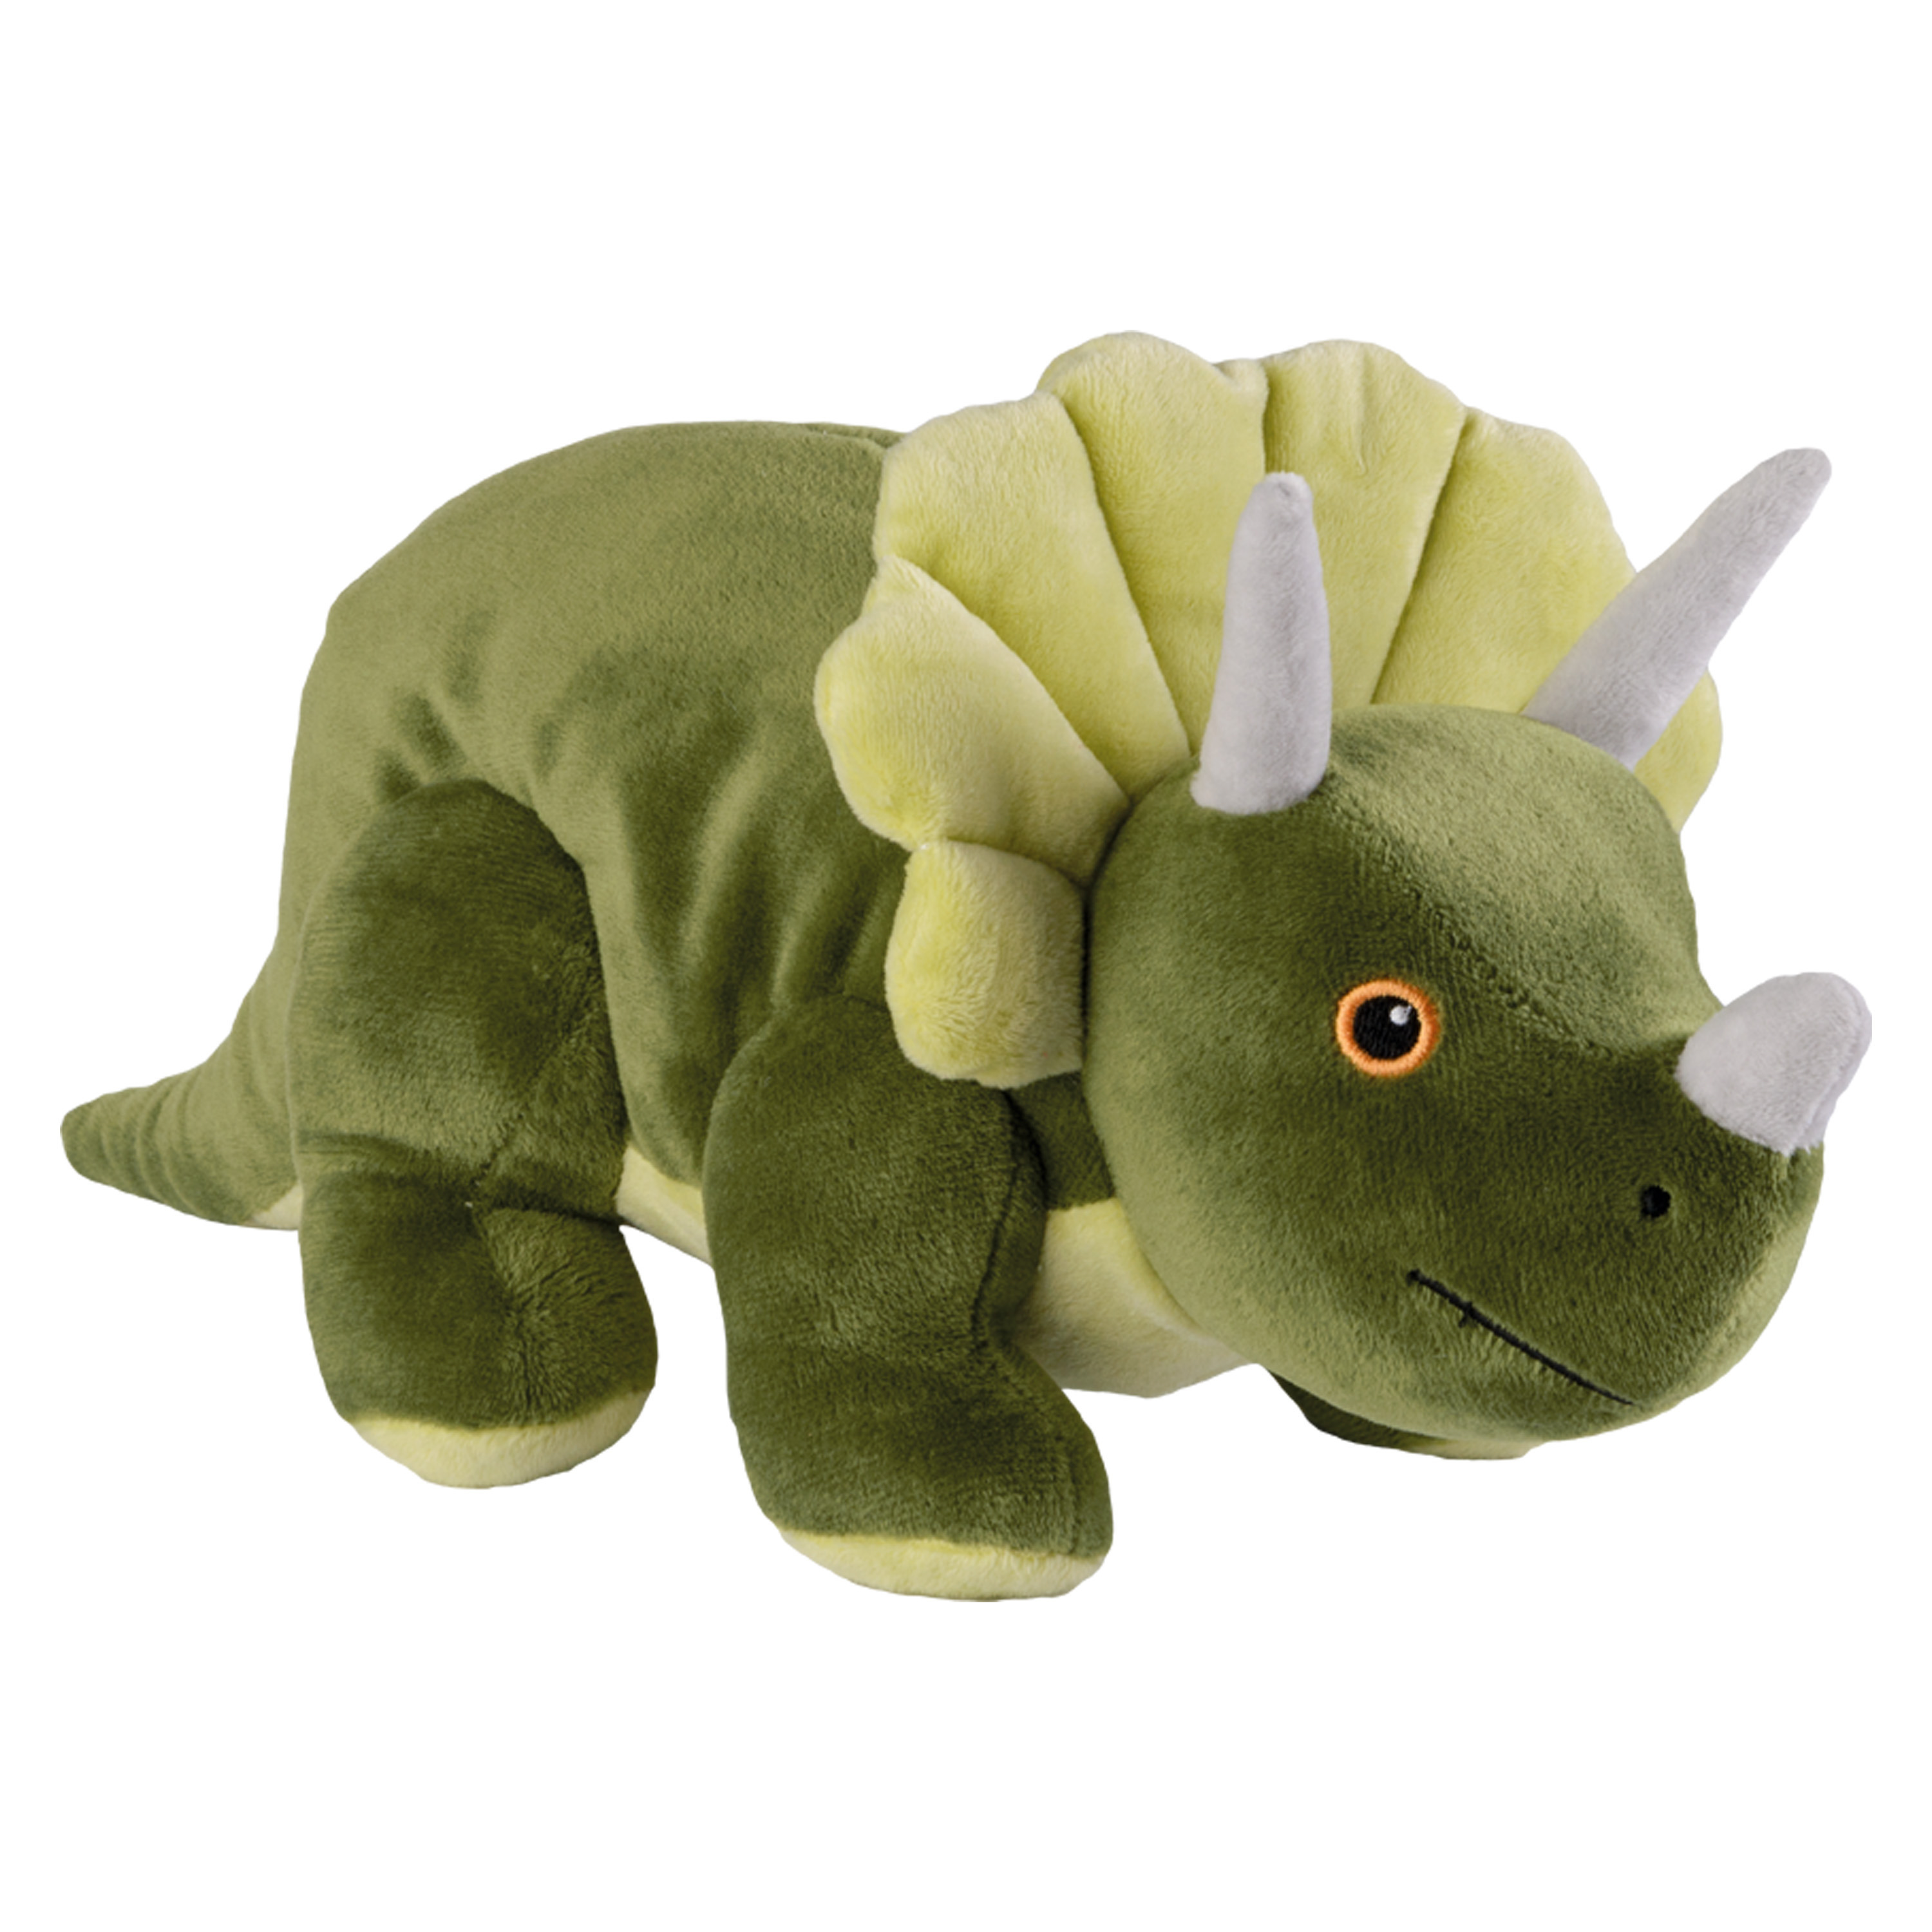 Warmte/magnetron opwarm knuffel - Dinosaurus/Triceratops - groen - 35 cm - pittenzak